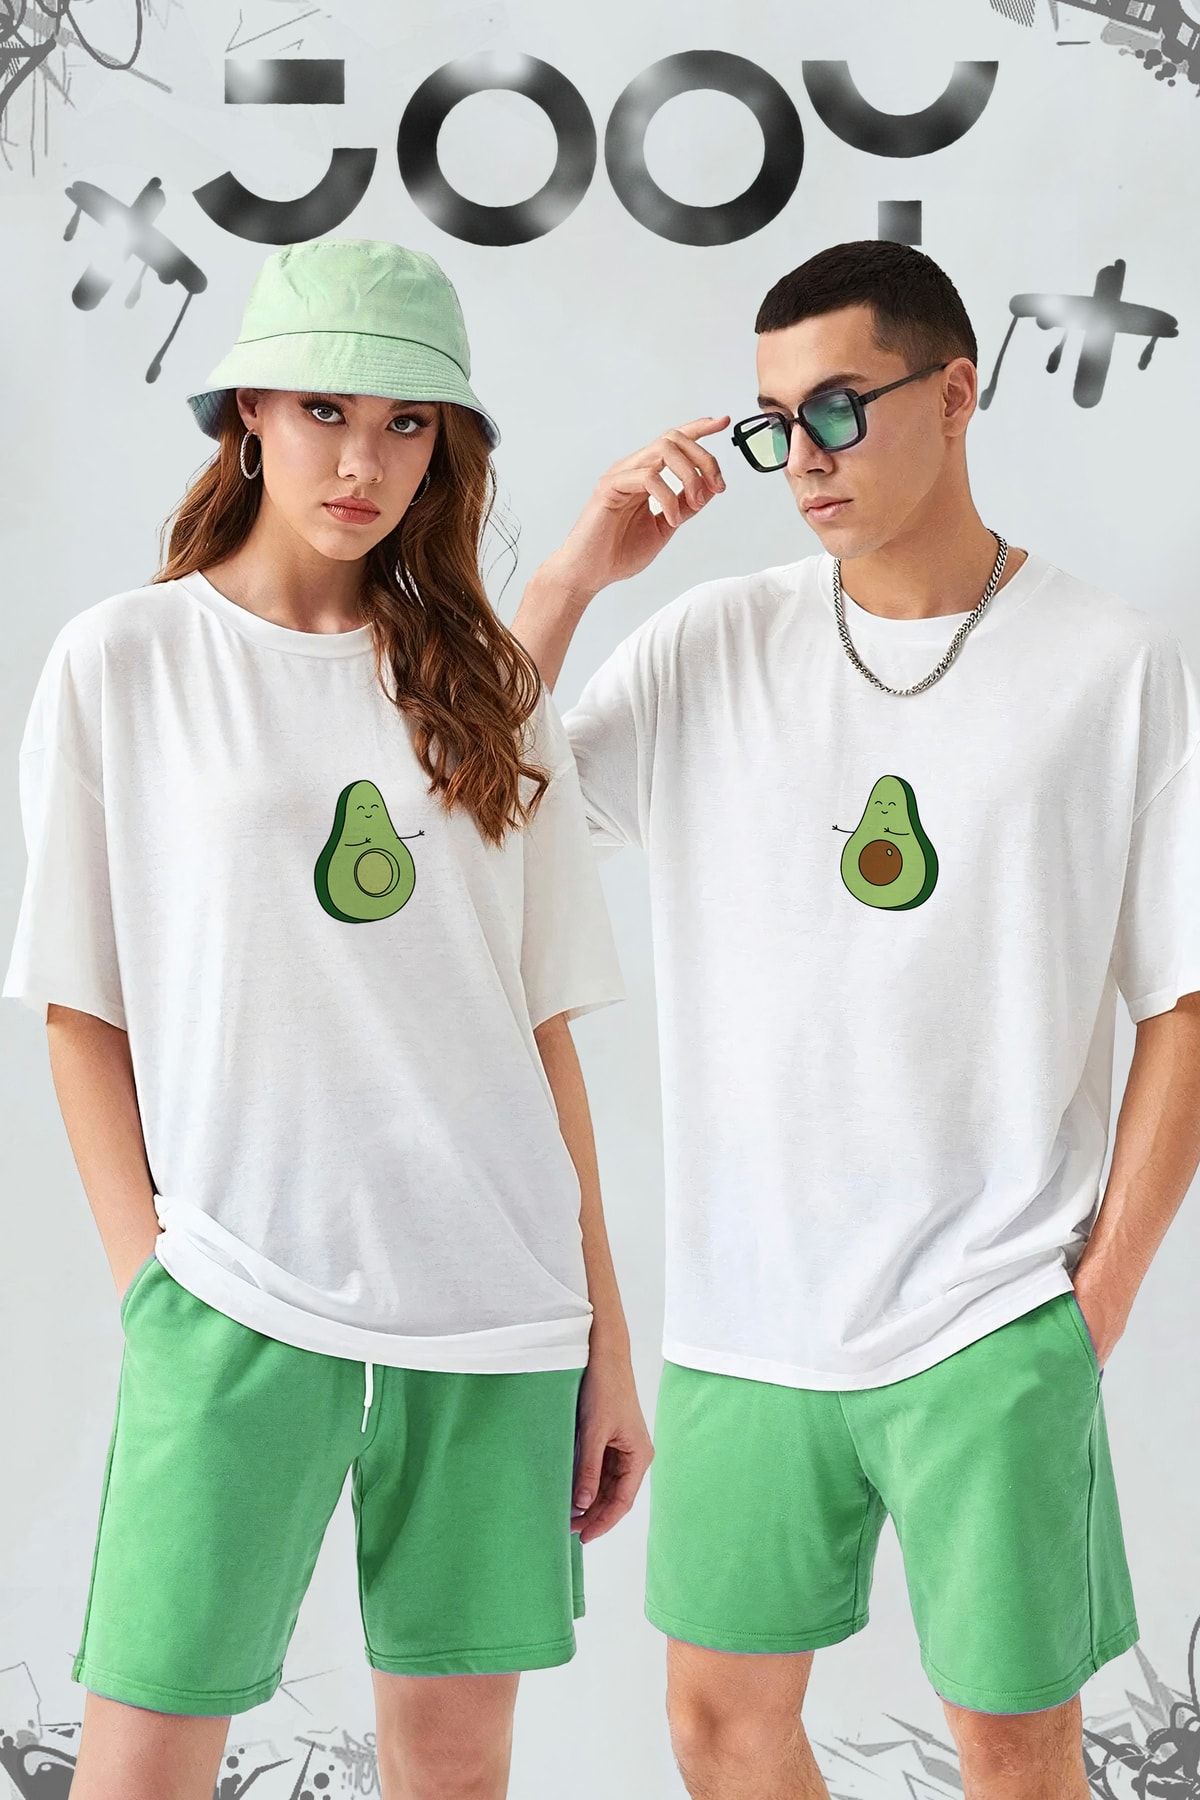 Jooy Company Avokado Tasarım Sevgili Çift Kombini Beyaz Oversize Tshirt 2'li Set